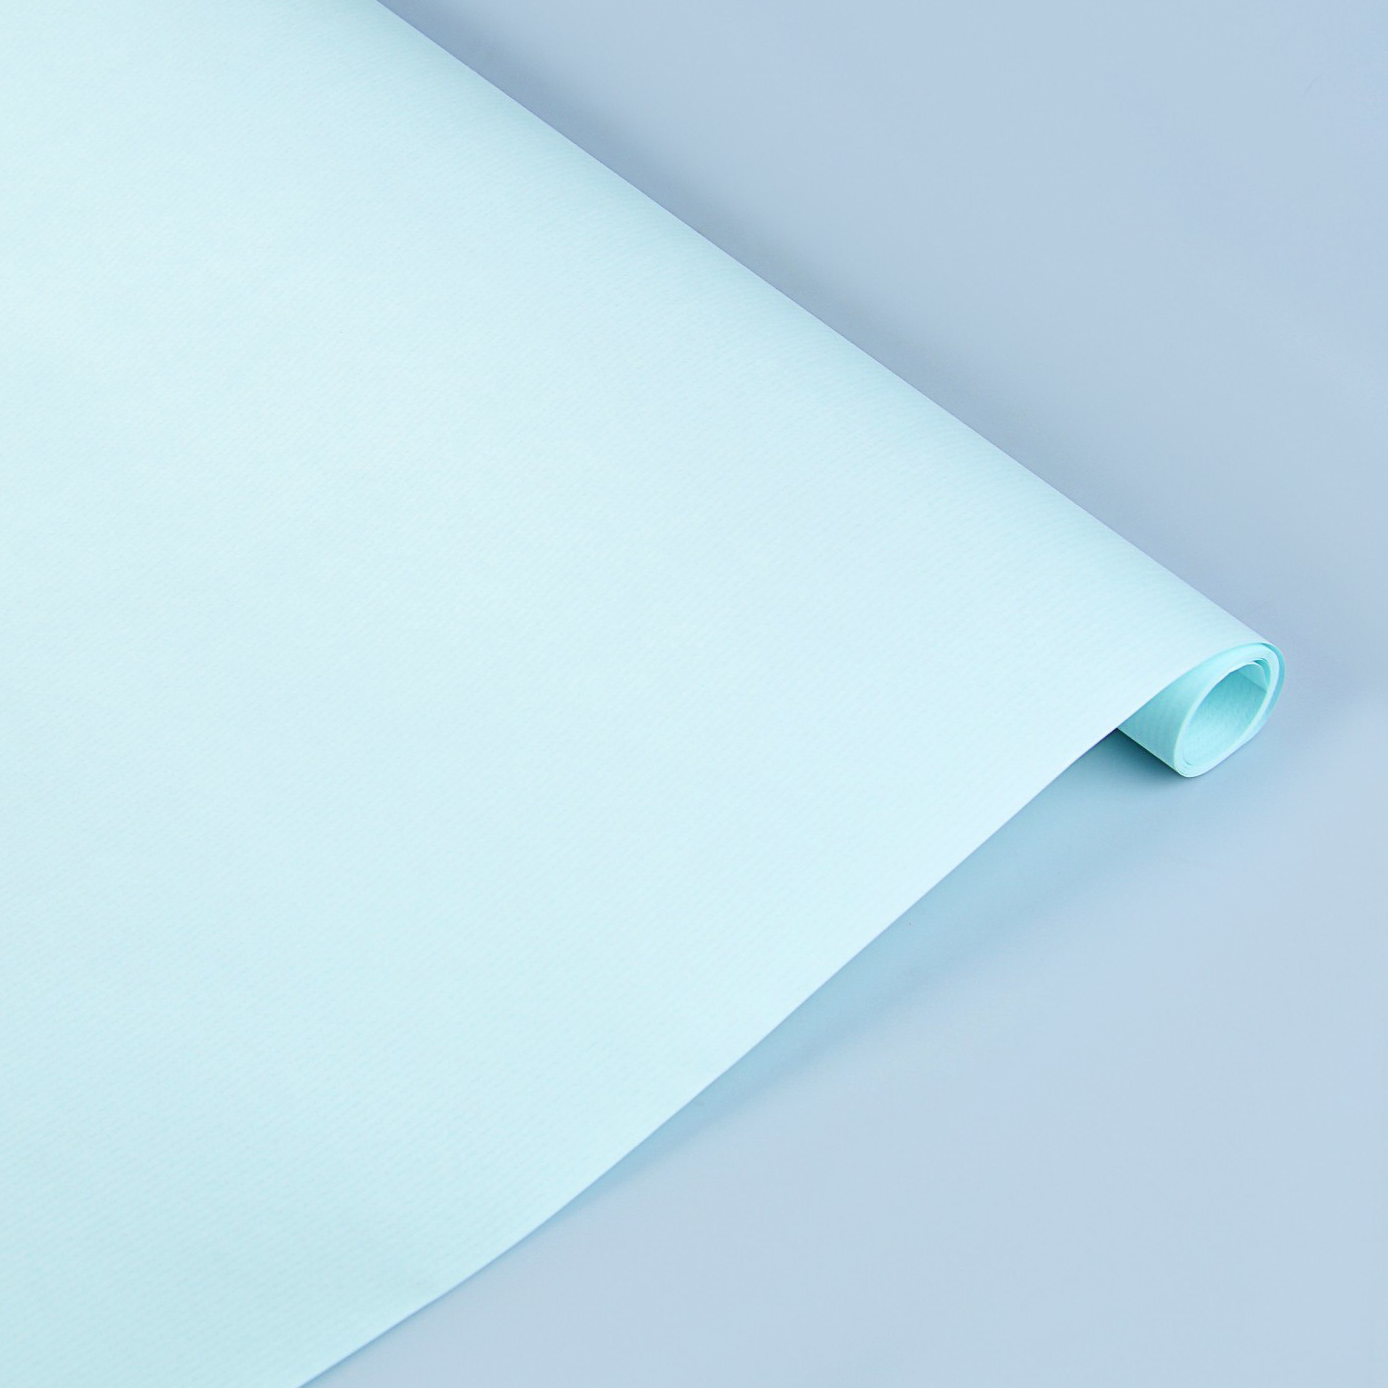 Бумага Крафт SADIPAL Fusion рулон 1х3 м 65 г, цвет Azul cielo бумага для декора и флористики крафт двусторонняя желтая однотонная рулон 1шт 0 5 х 10 м